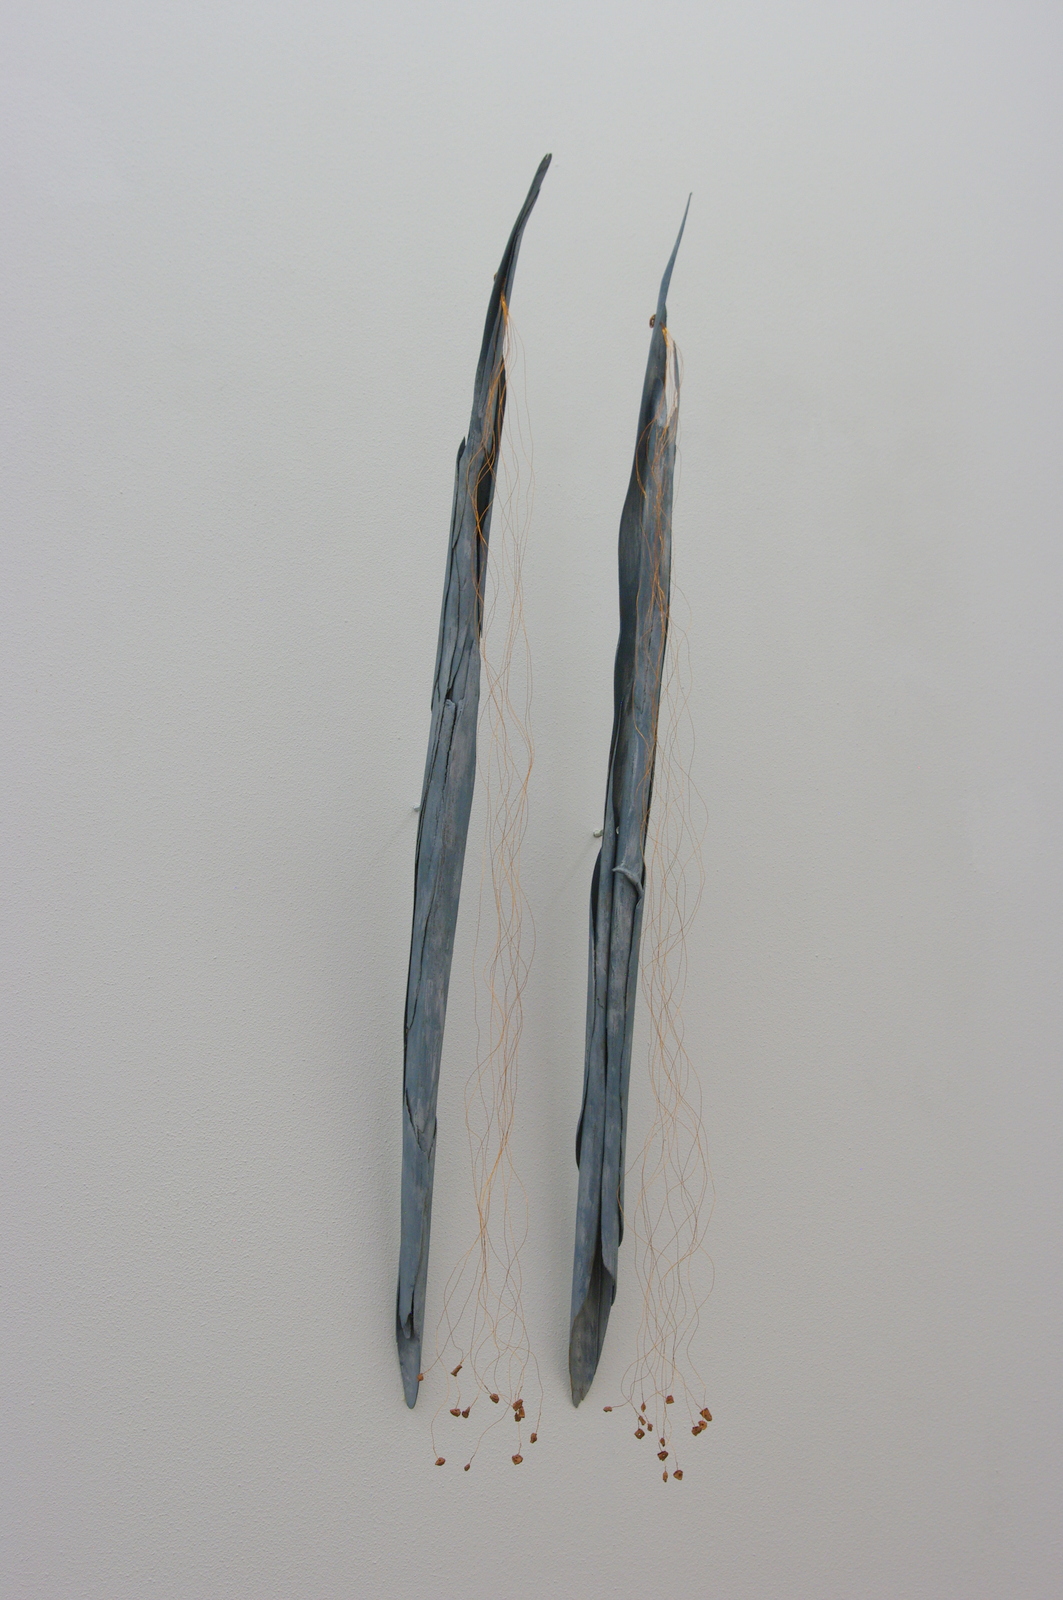 2006 sold<br>90 x 8 x 9 cm each<br>barkof eucalyptus, copper wire, cork